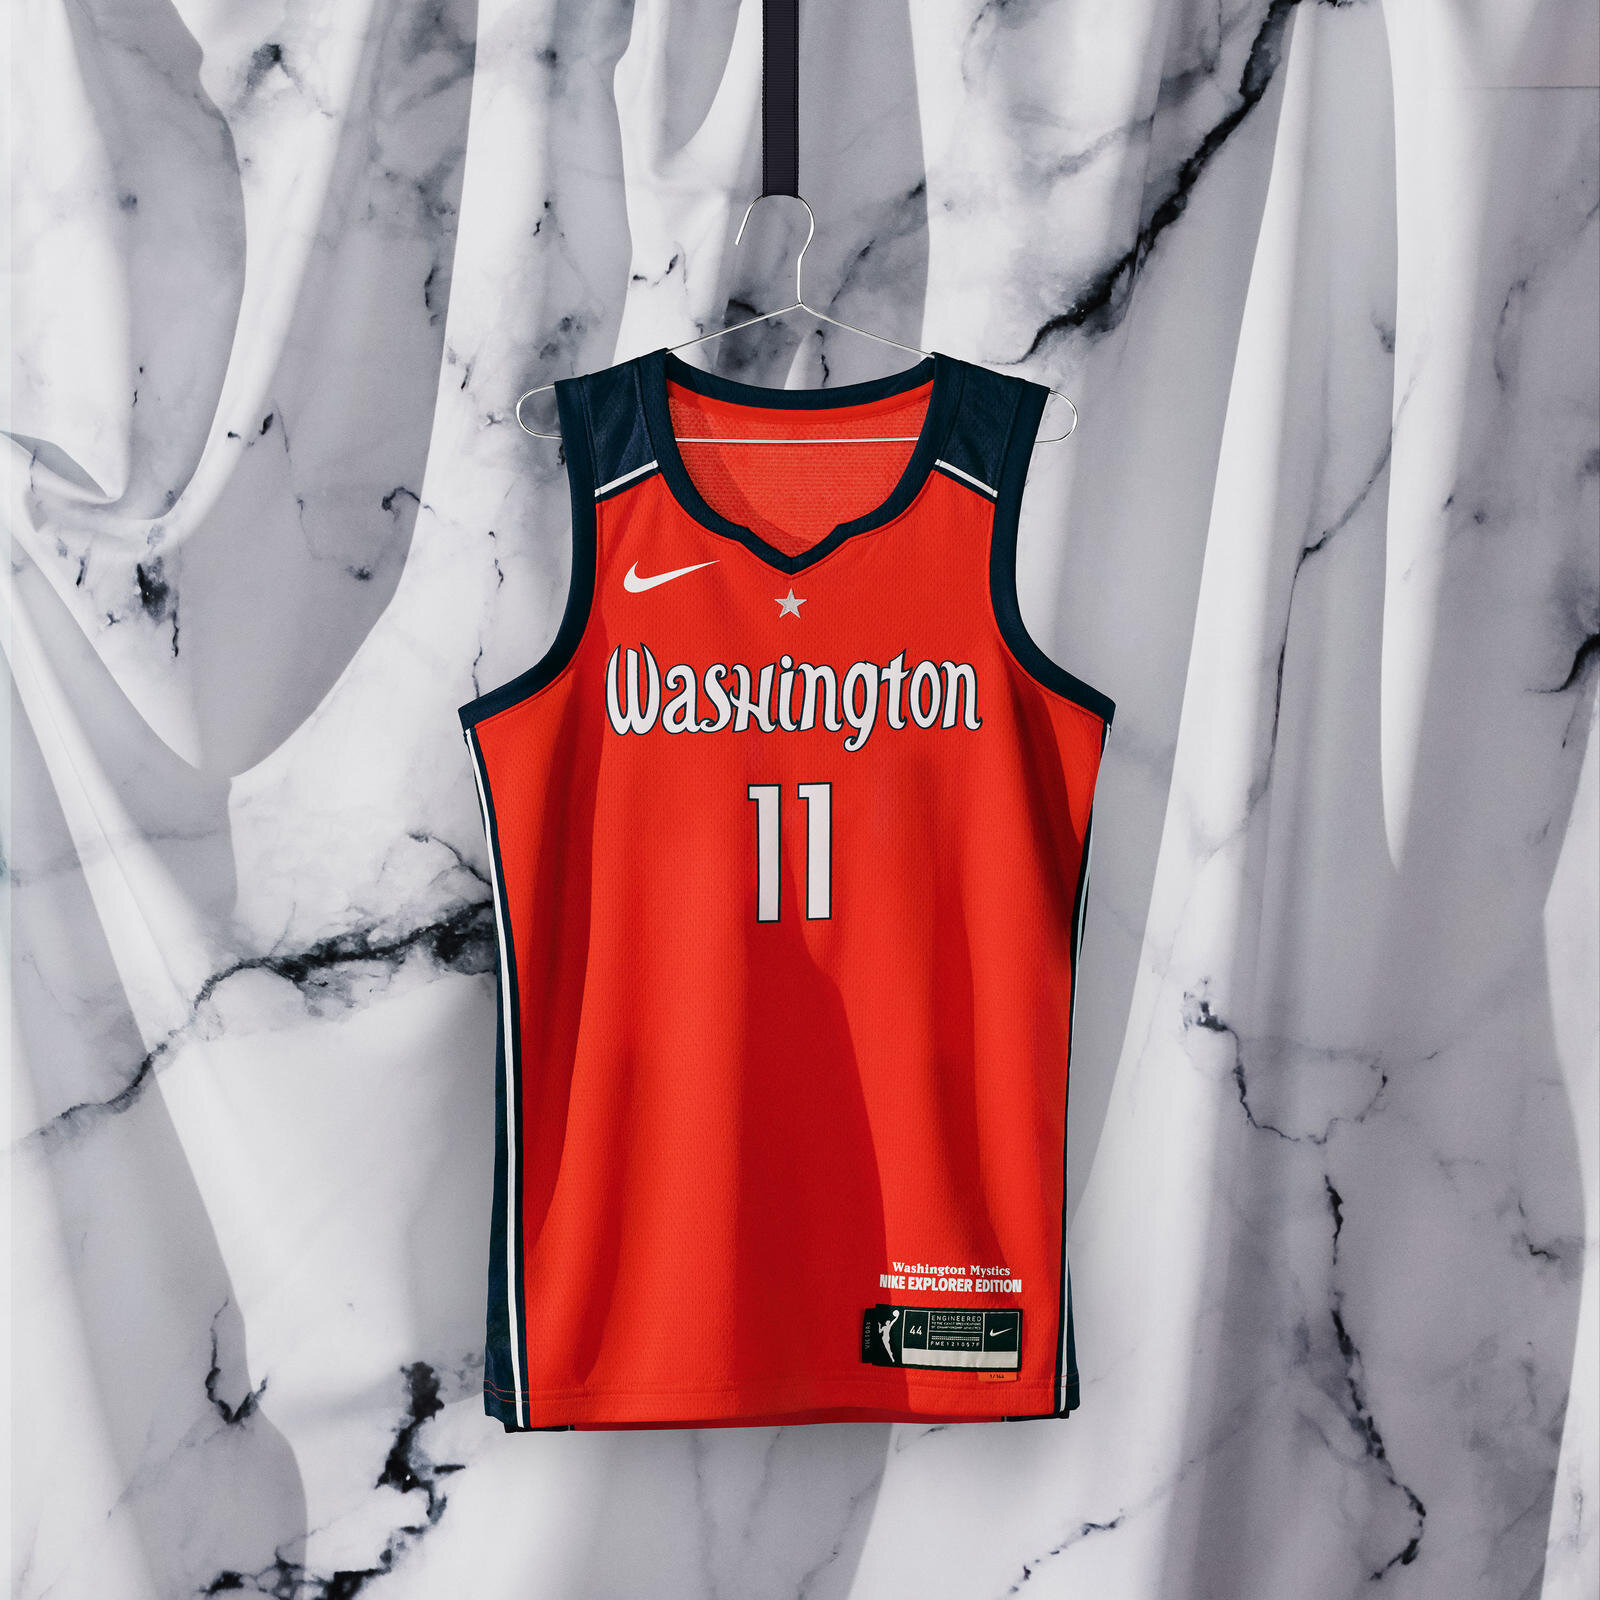 WNBA unveils new Nike uniforms, jerseys for 2019 season (Photos